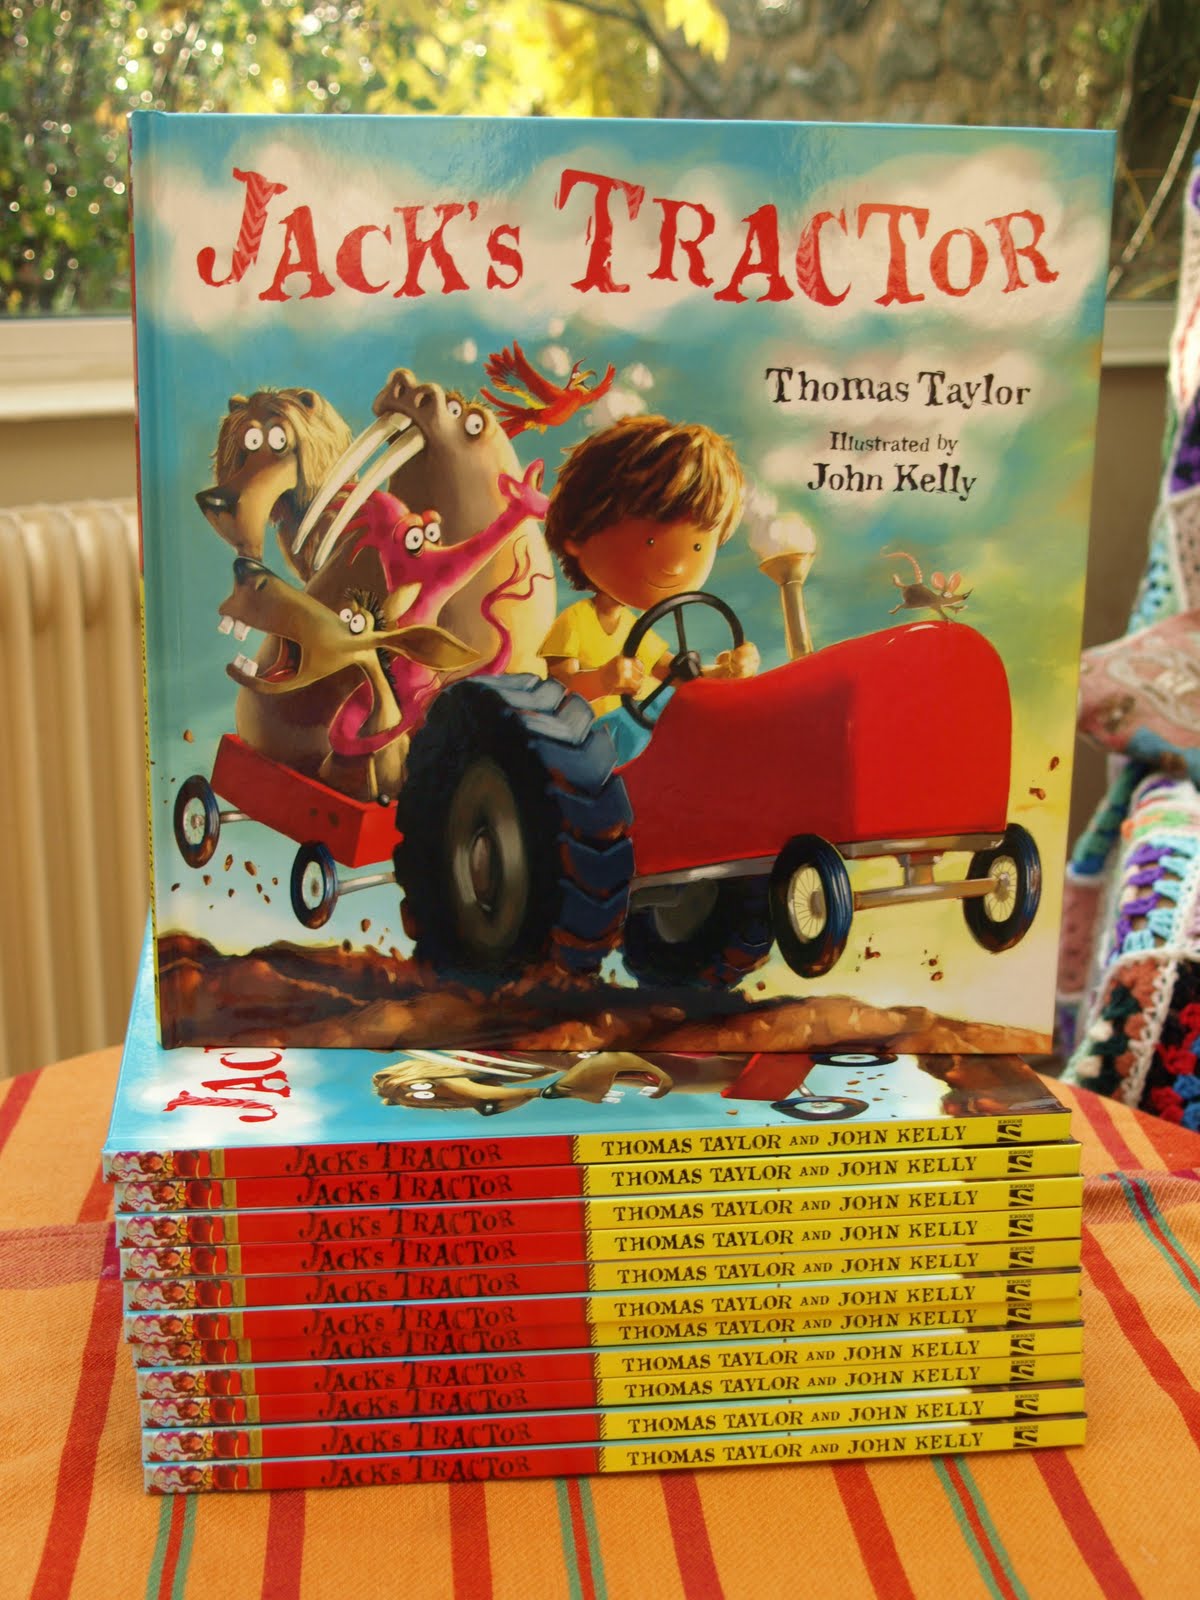 Jacks Tractor Thomas Taylor illustrator